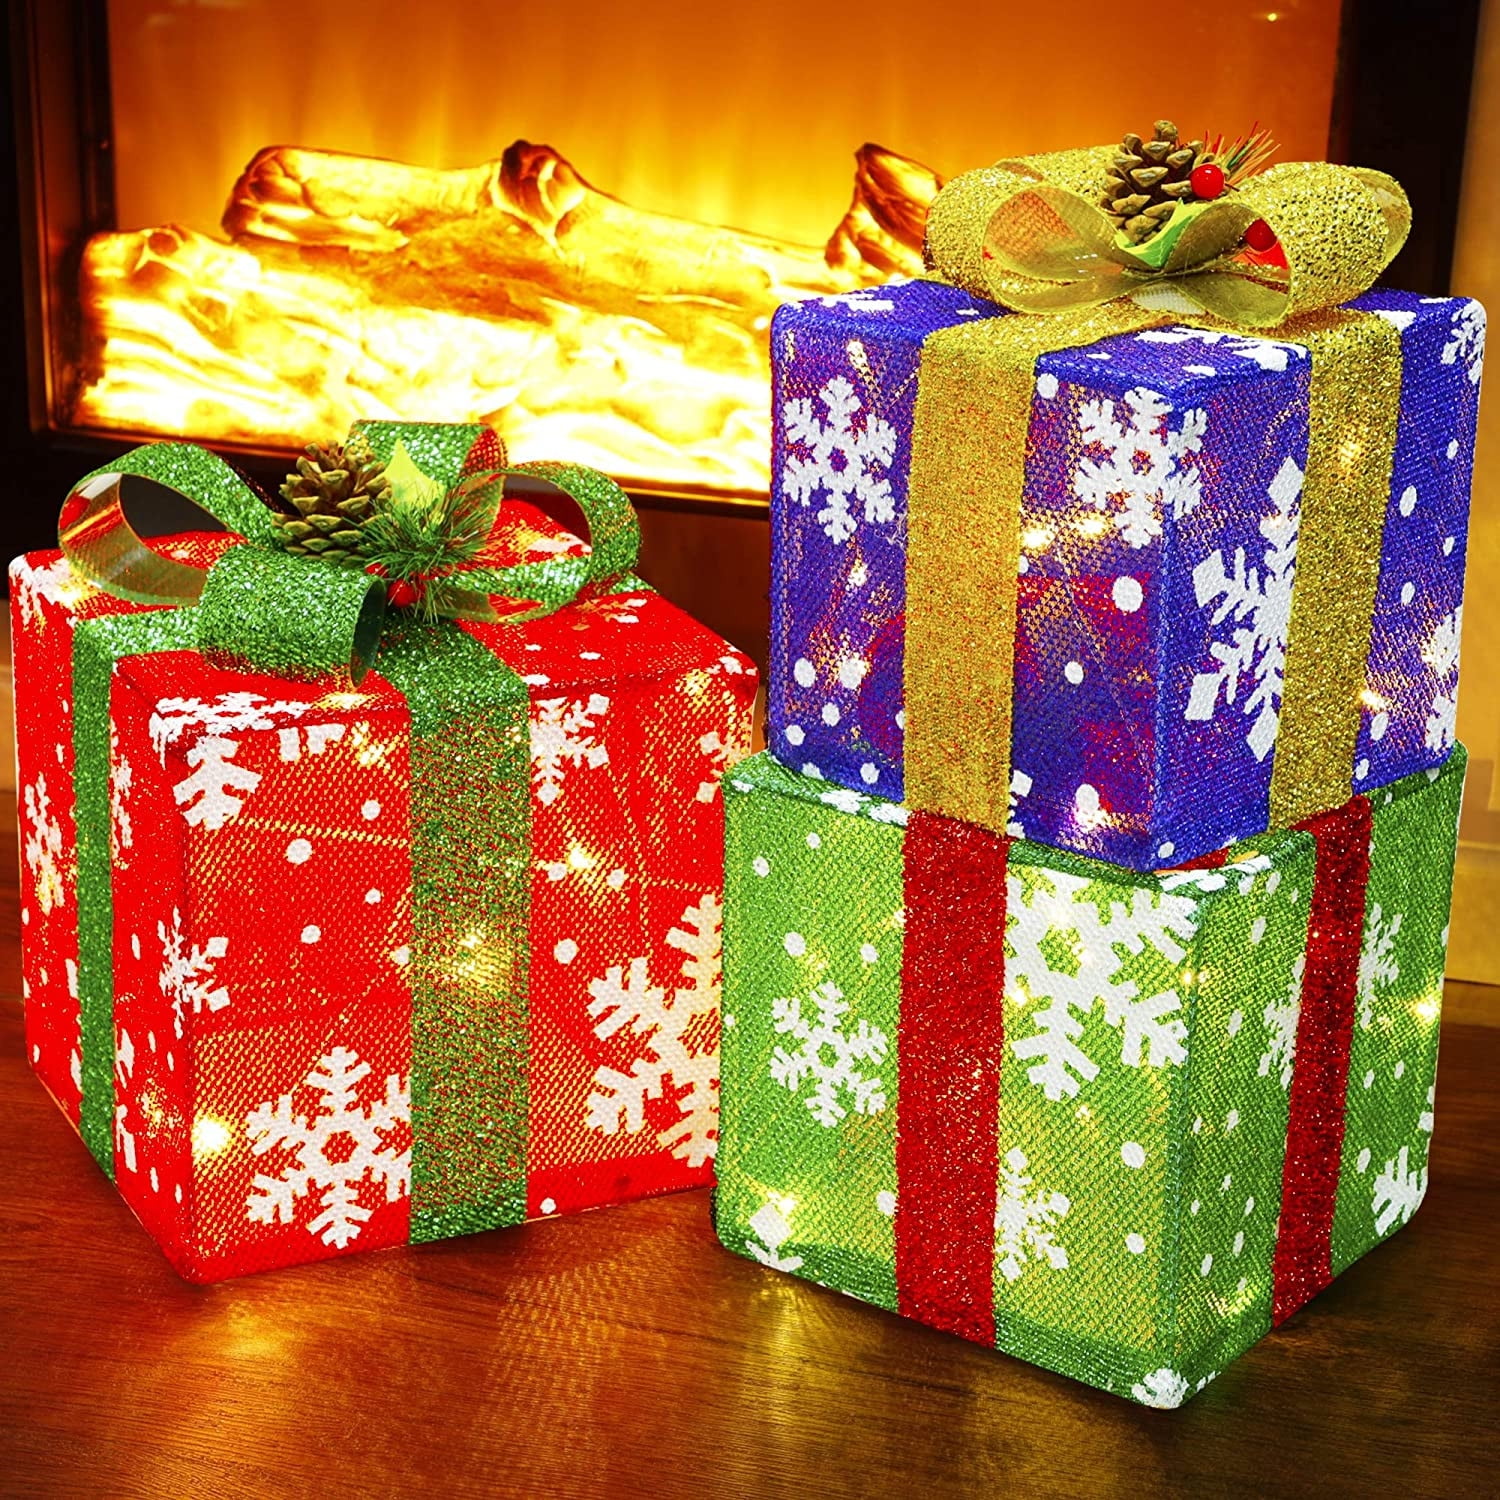 AnuirheiH 3 Pcs Christmas Lighted Gift Boxes Christmas Decorations